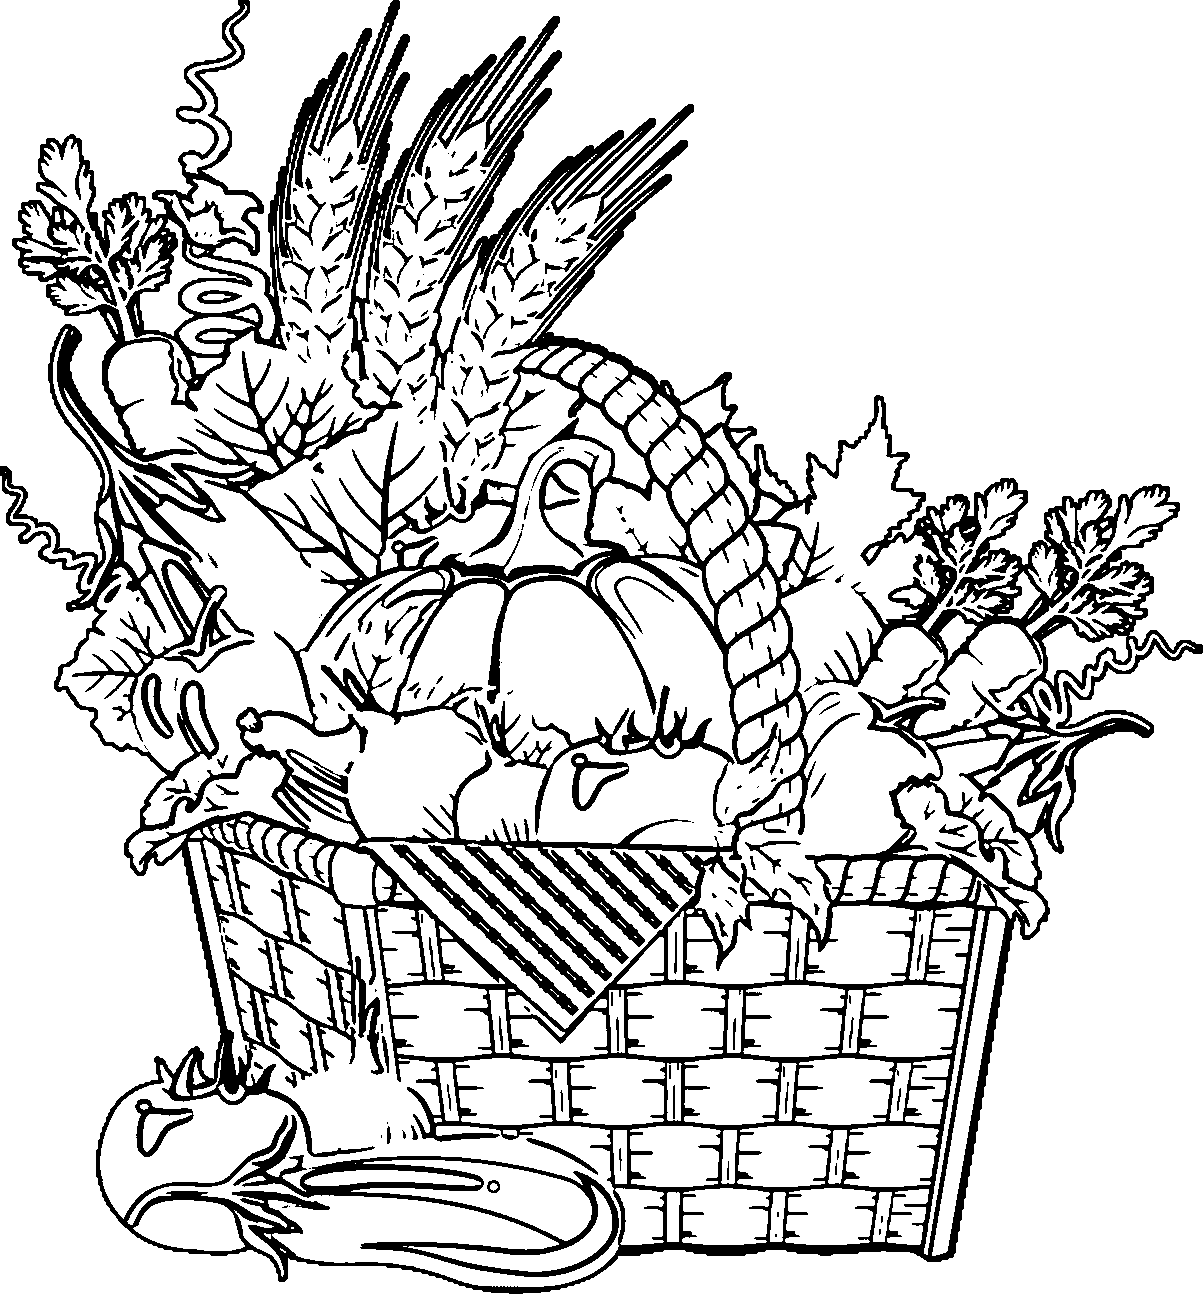 Basket of Vegetables Coloring Page